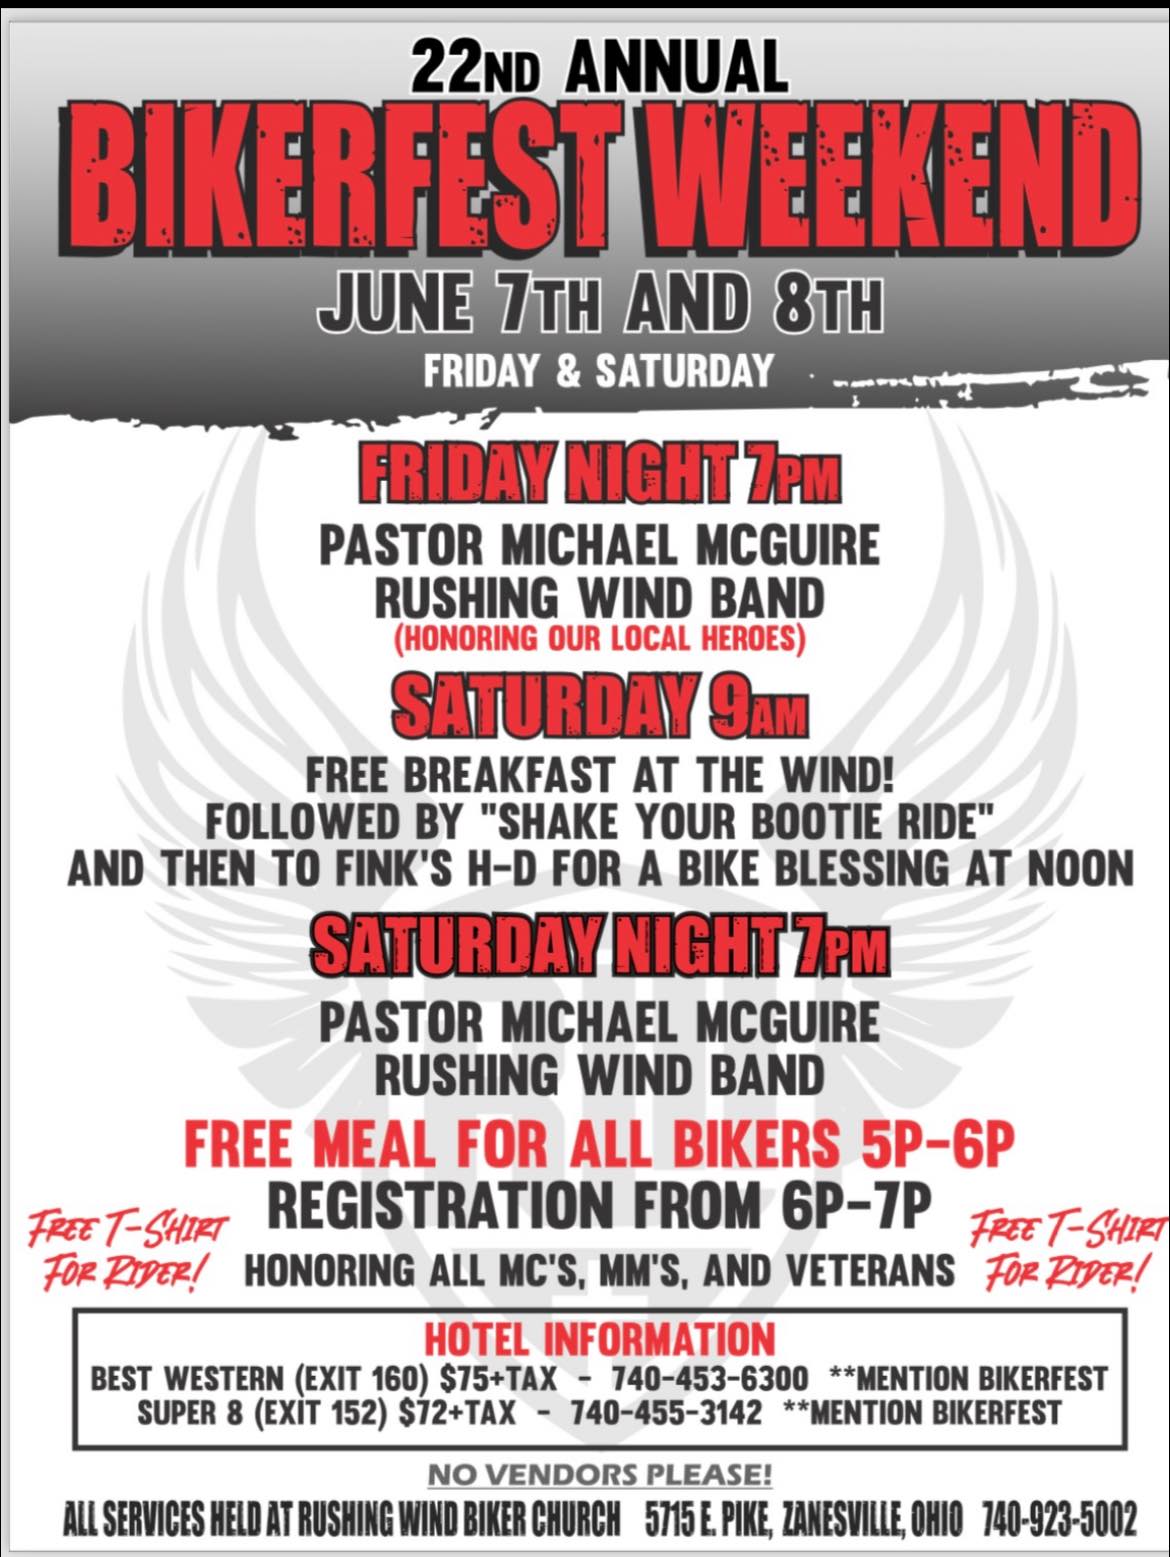 22nd Annual Bikerfest Weekend at Rushing Wind Biker Church - WHIZ - Fox 5 / Marquee Broadcasting